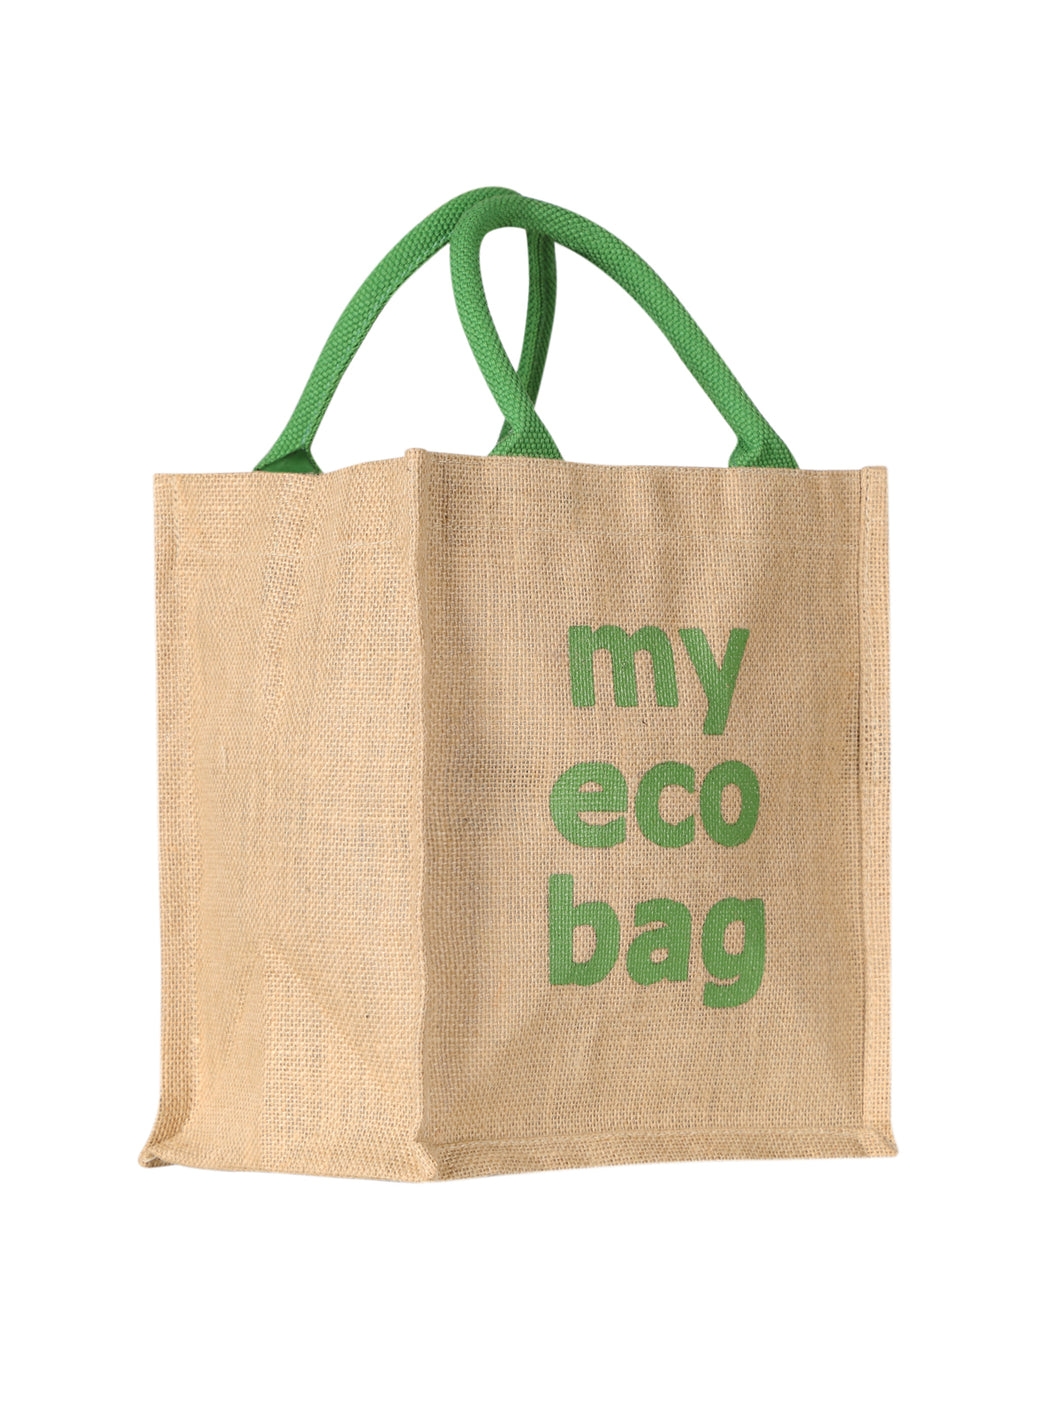 Eco Bag PNG Transparent Images Free Download | Vector Files | Pngtree